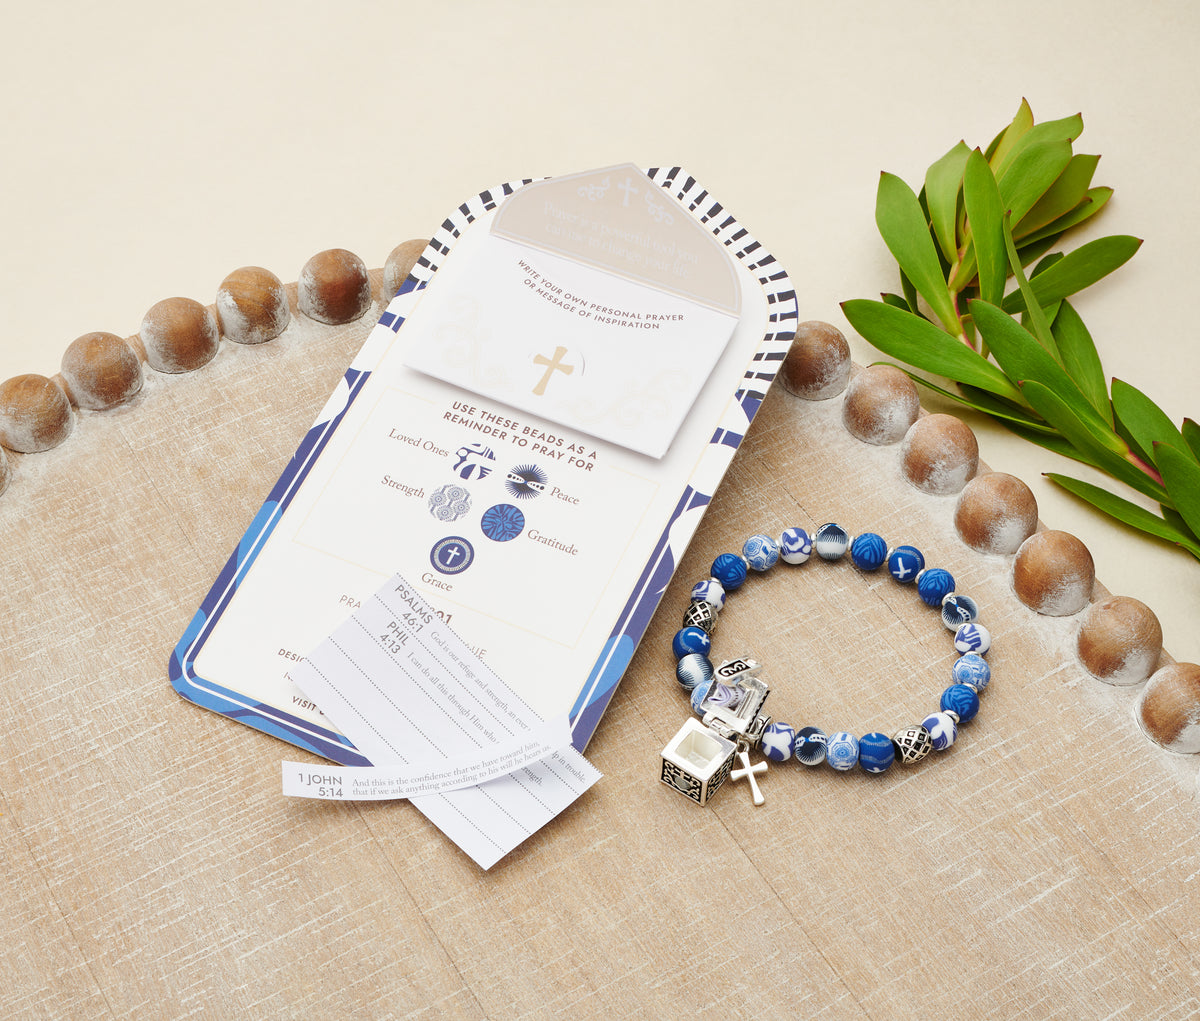 Blue Prayer Bracelet